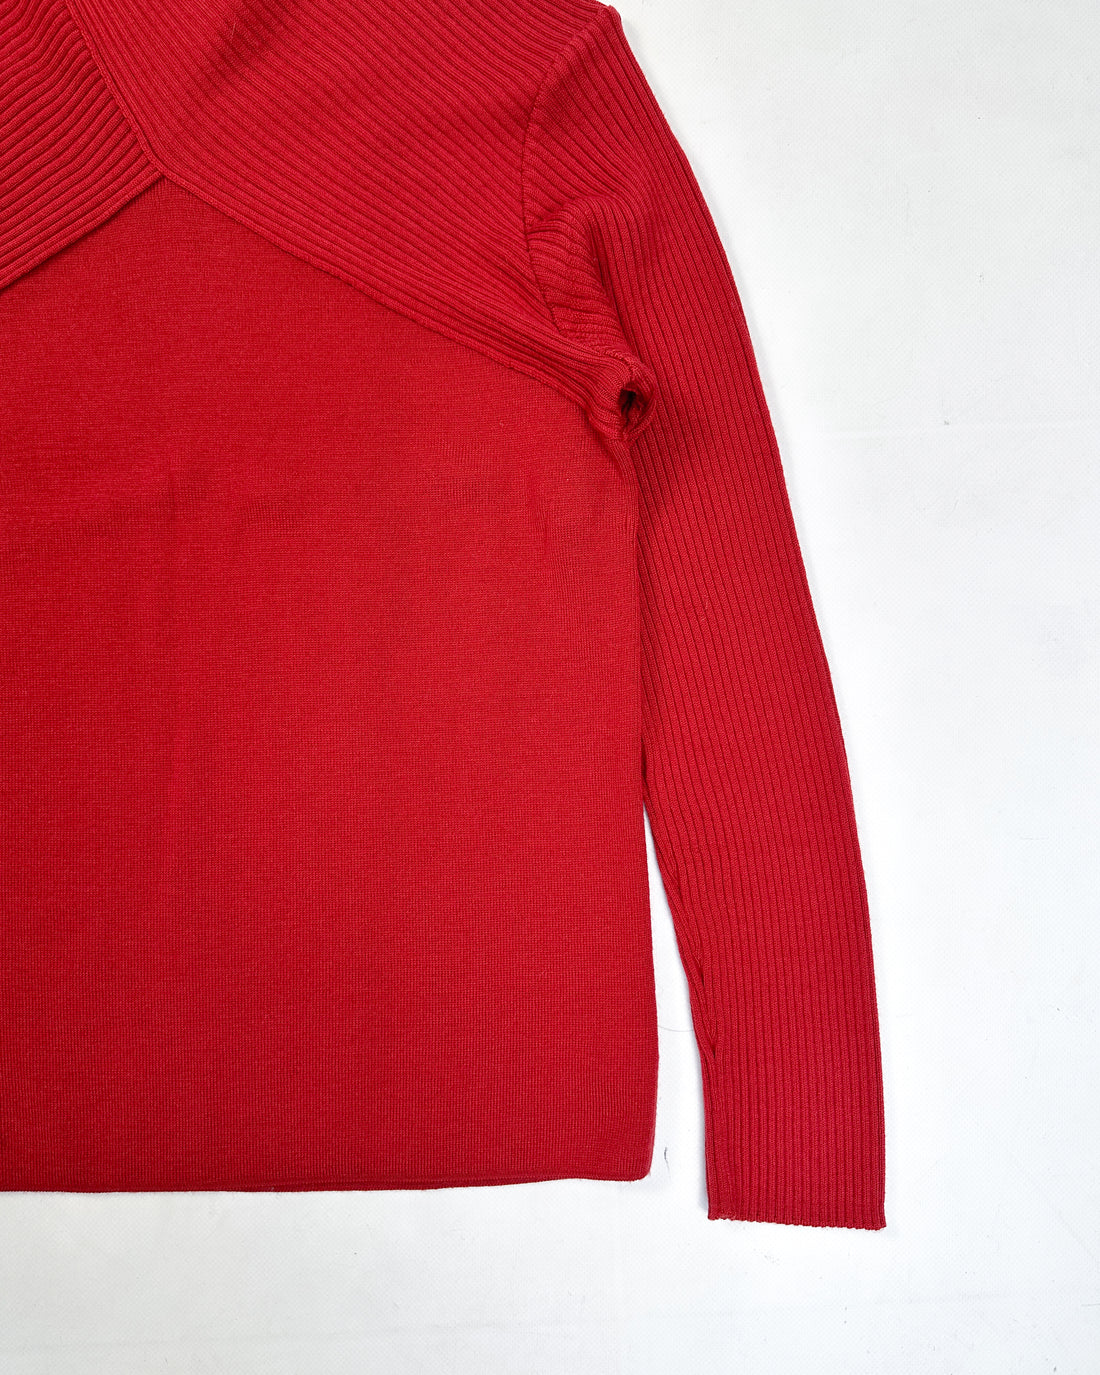 Armani Red Asymmetric Wool Knit 1990's